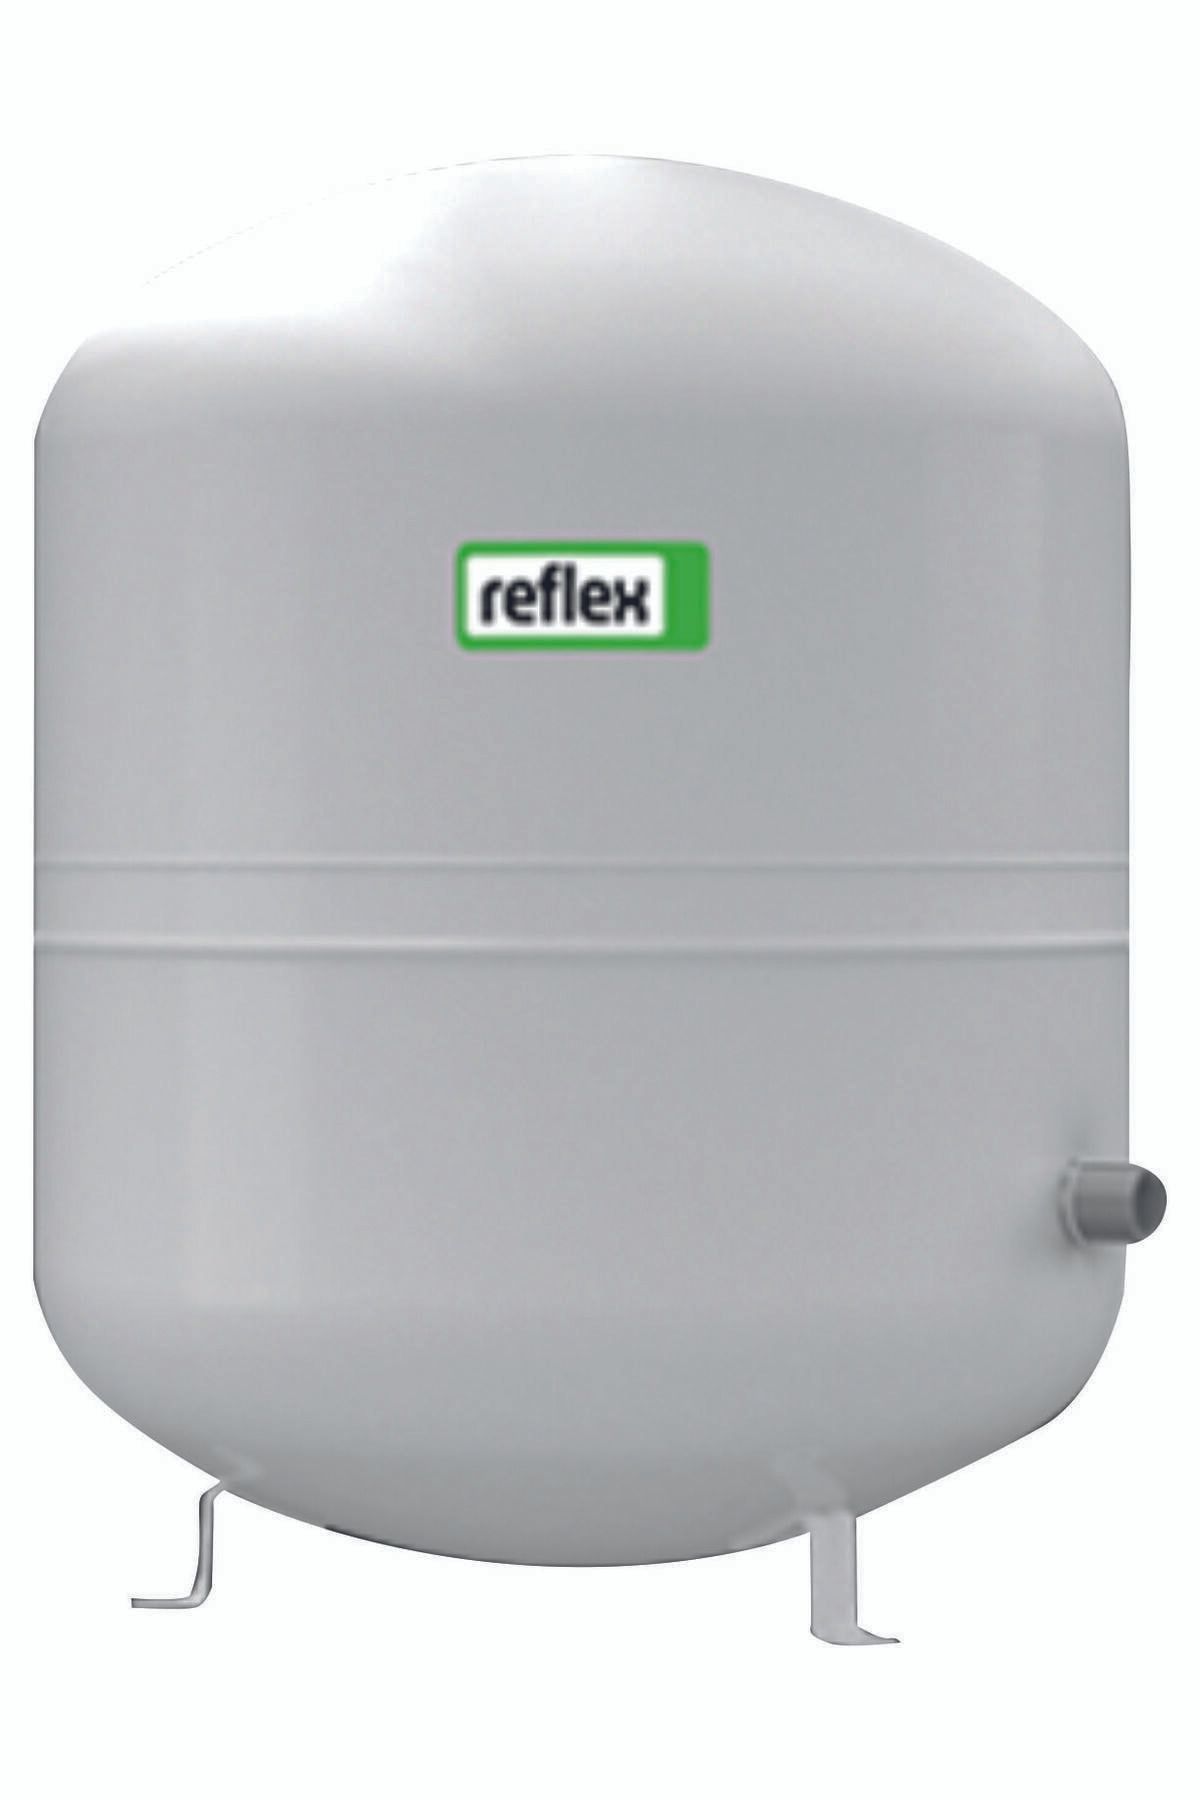 Reflex - Reflex N & NG 100 lt Sabit Membranlı 6 bar Genleşme Tankı - reflex100